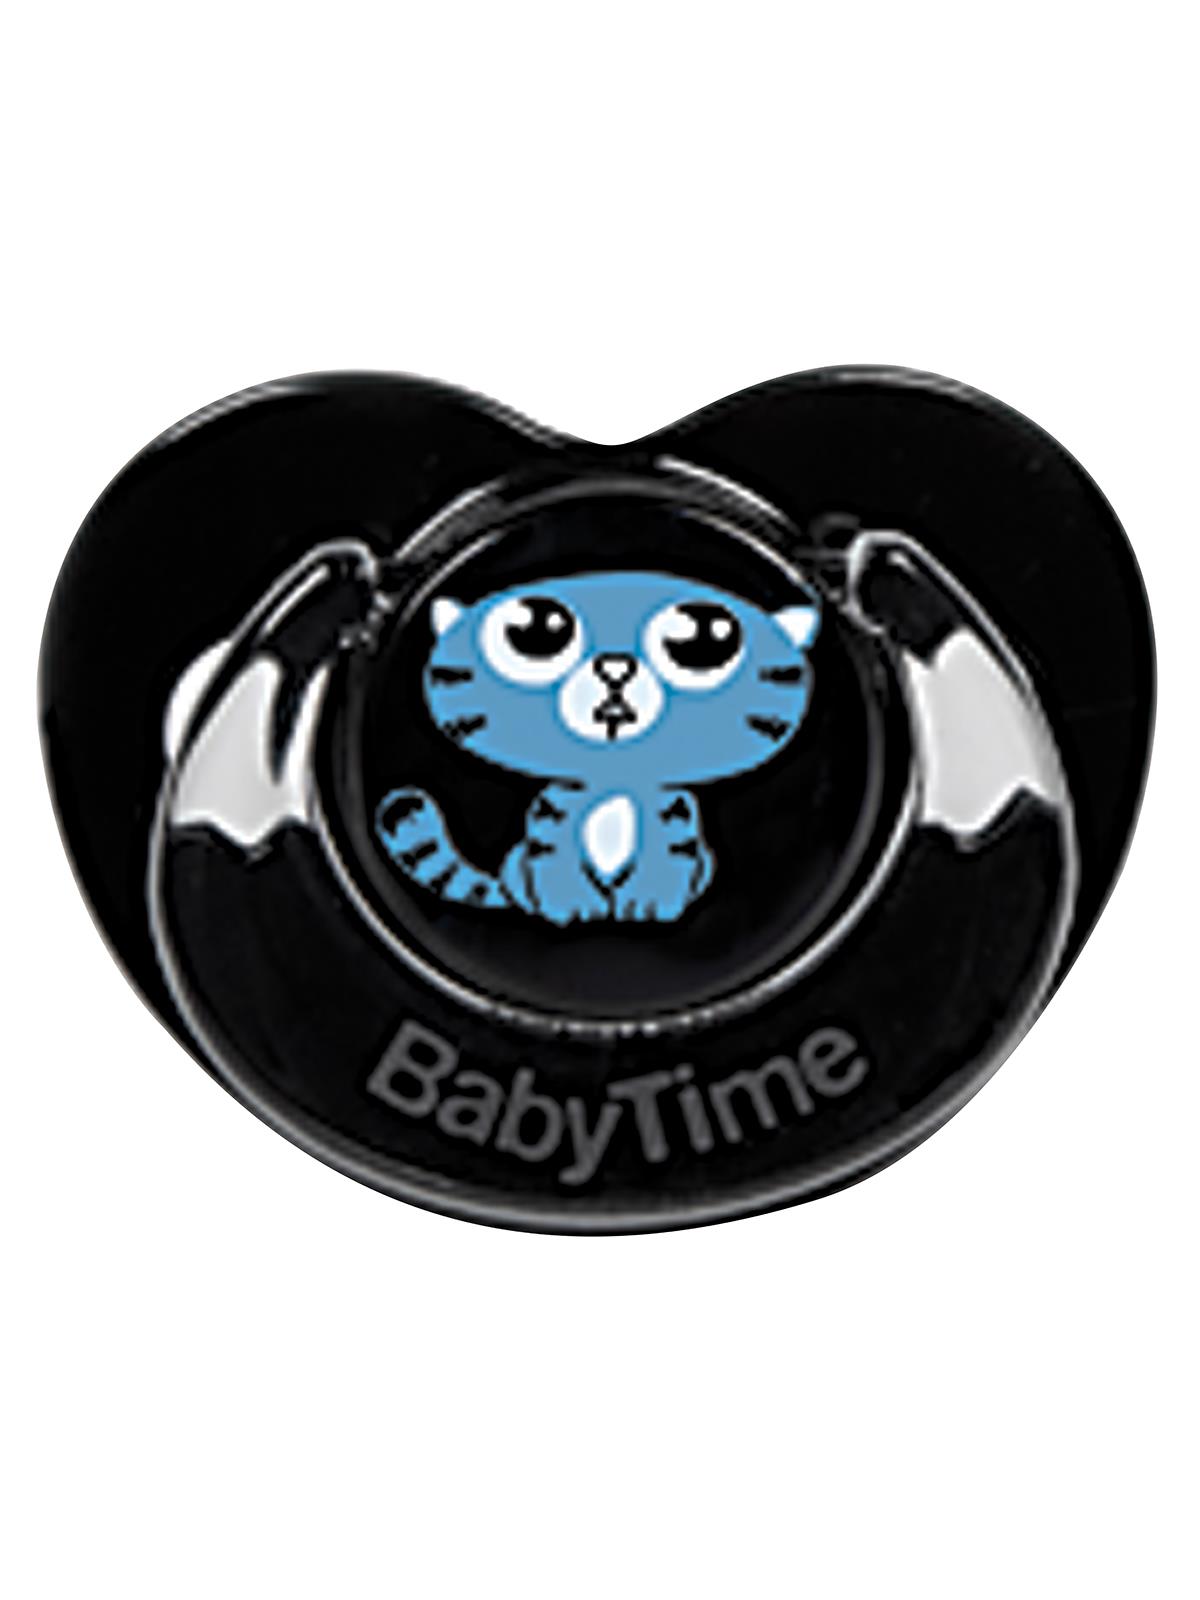 Baby Time Damaklı Silikon Emzik 0-6 Ay Siyah